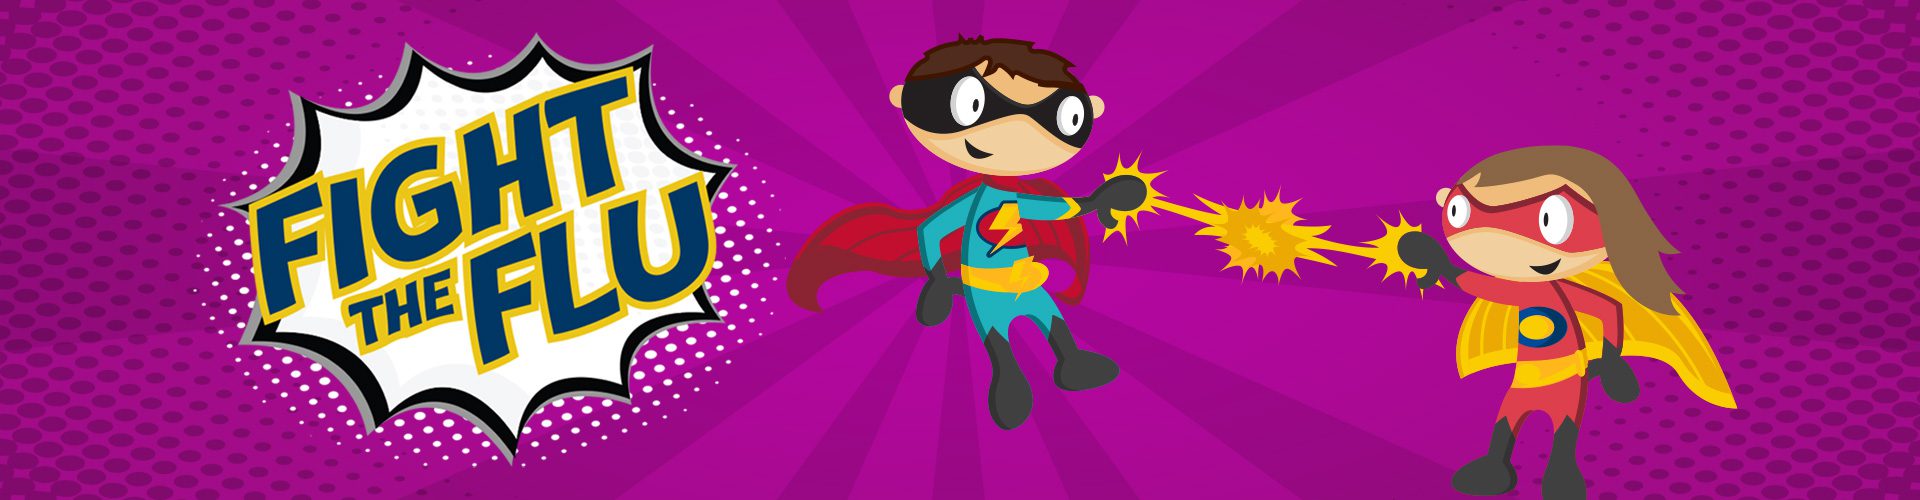 Fight the Flu superhero banner